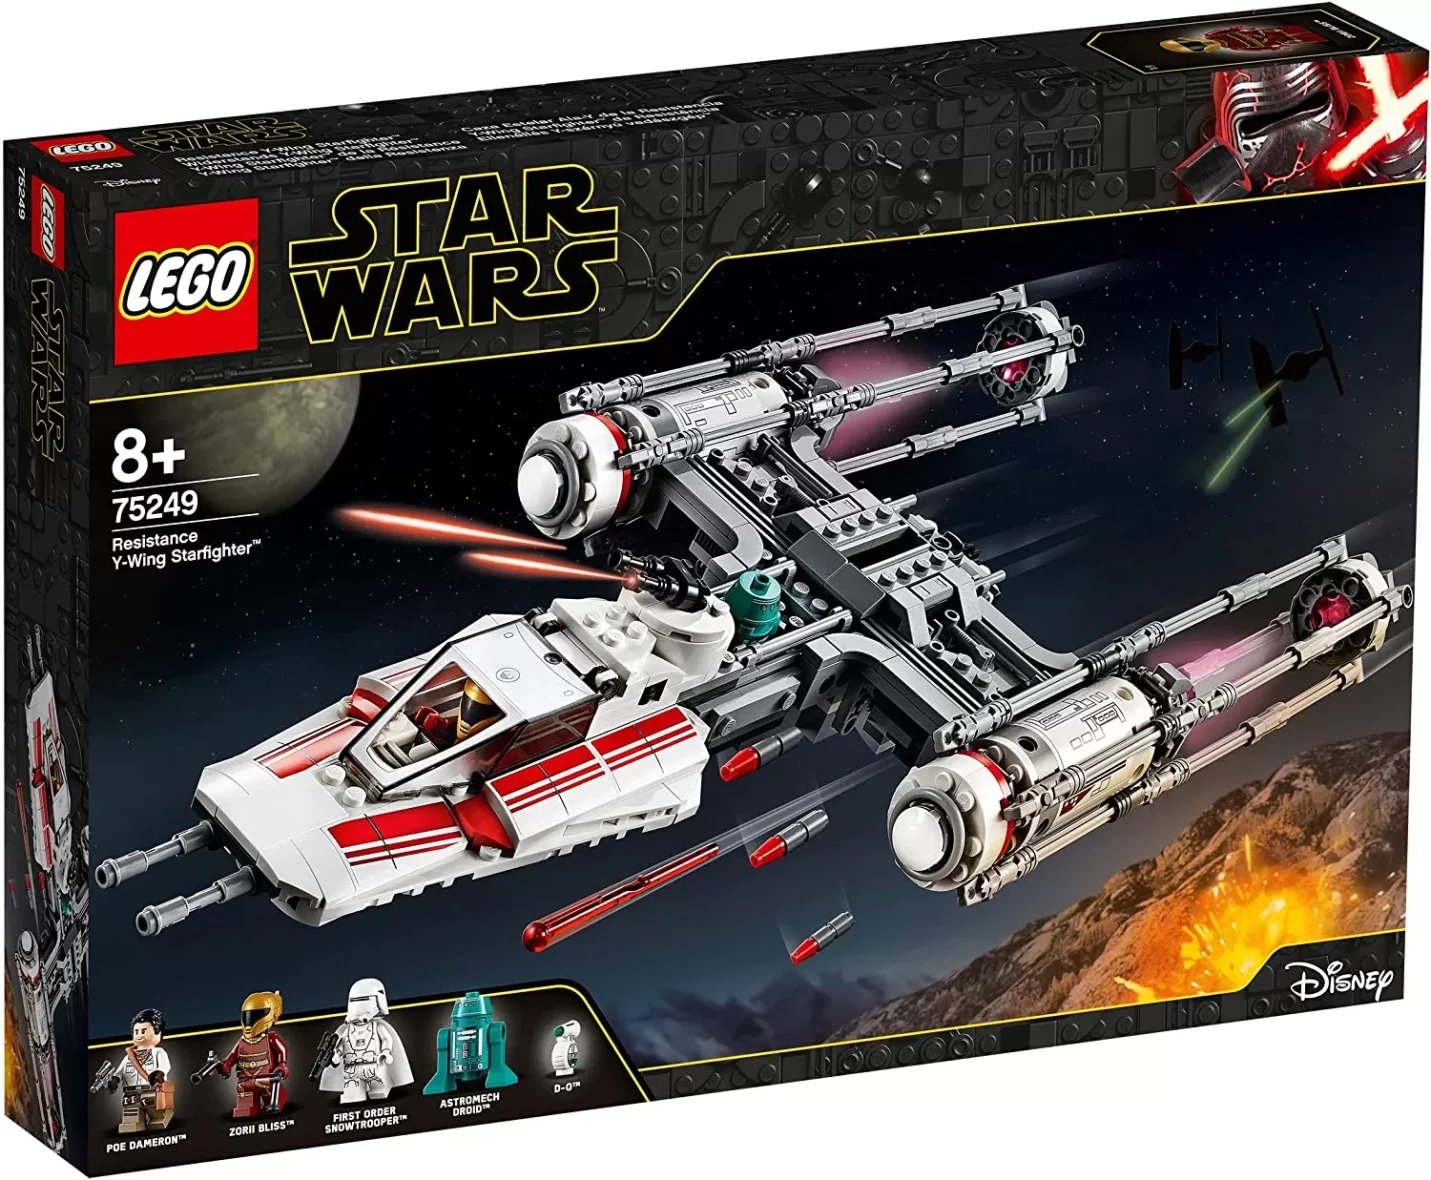 LEGO STAR WARS RESISTANCE Y-WING STARFIGHTER 75249